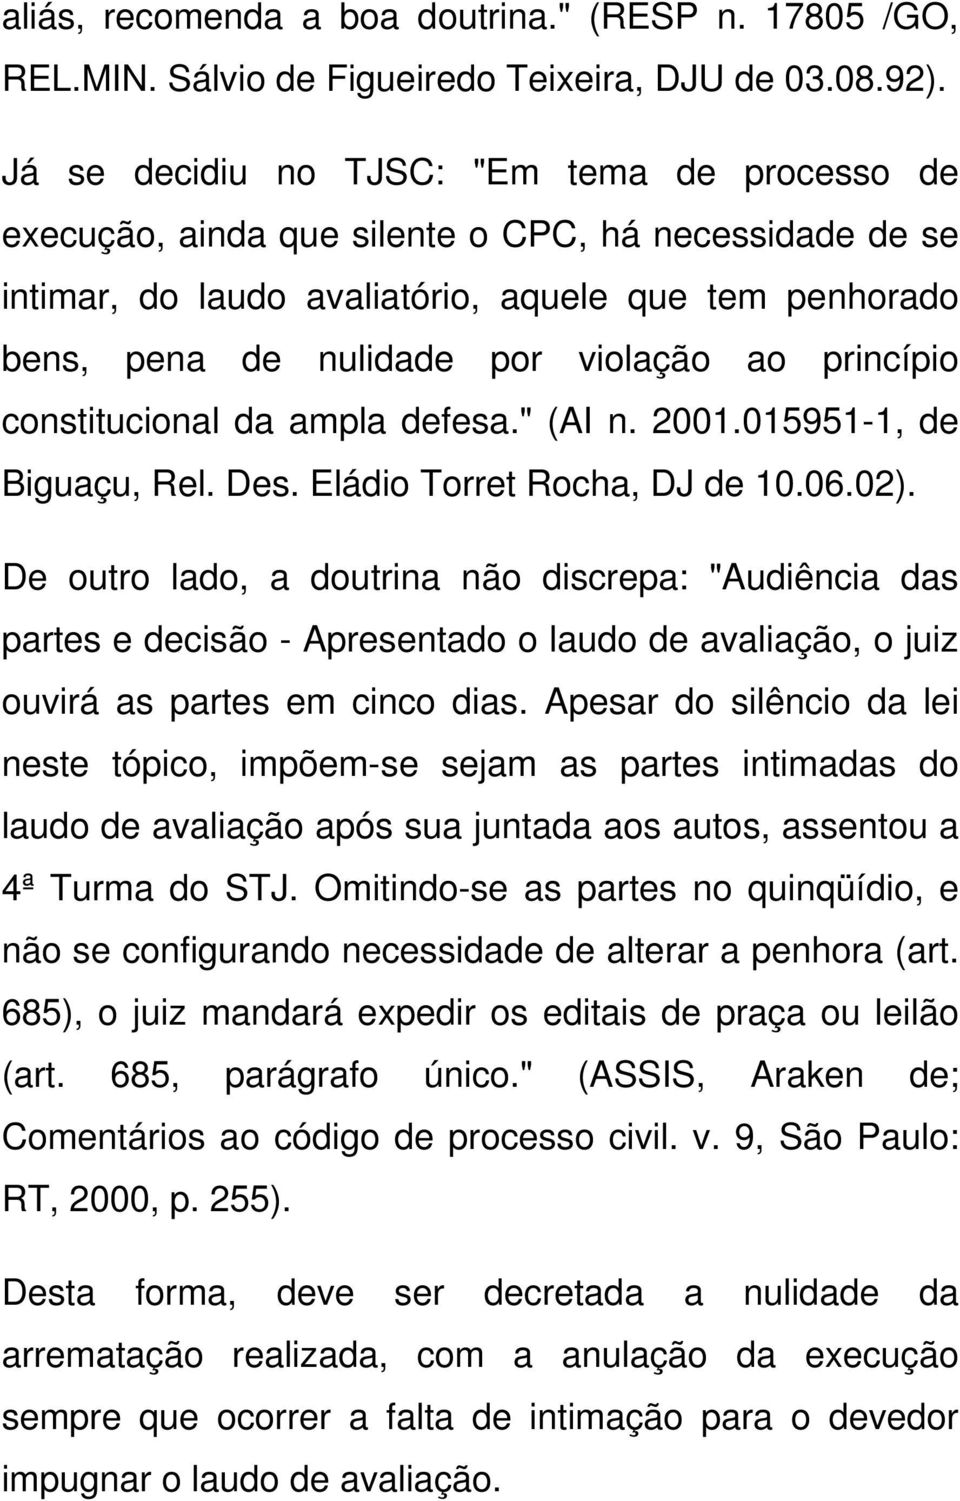 princípio constitucional da ampla defesa." (AI n. 2001.015951-1, de Biguaçu, Rel. Des. Eládio Torret Rocha, DJ de 10.06.02).